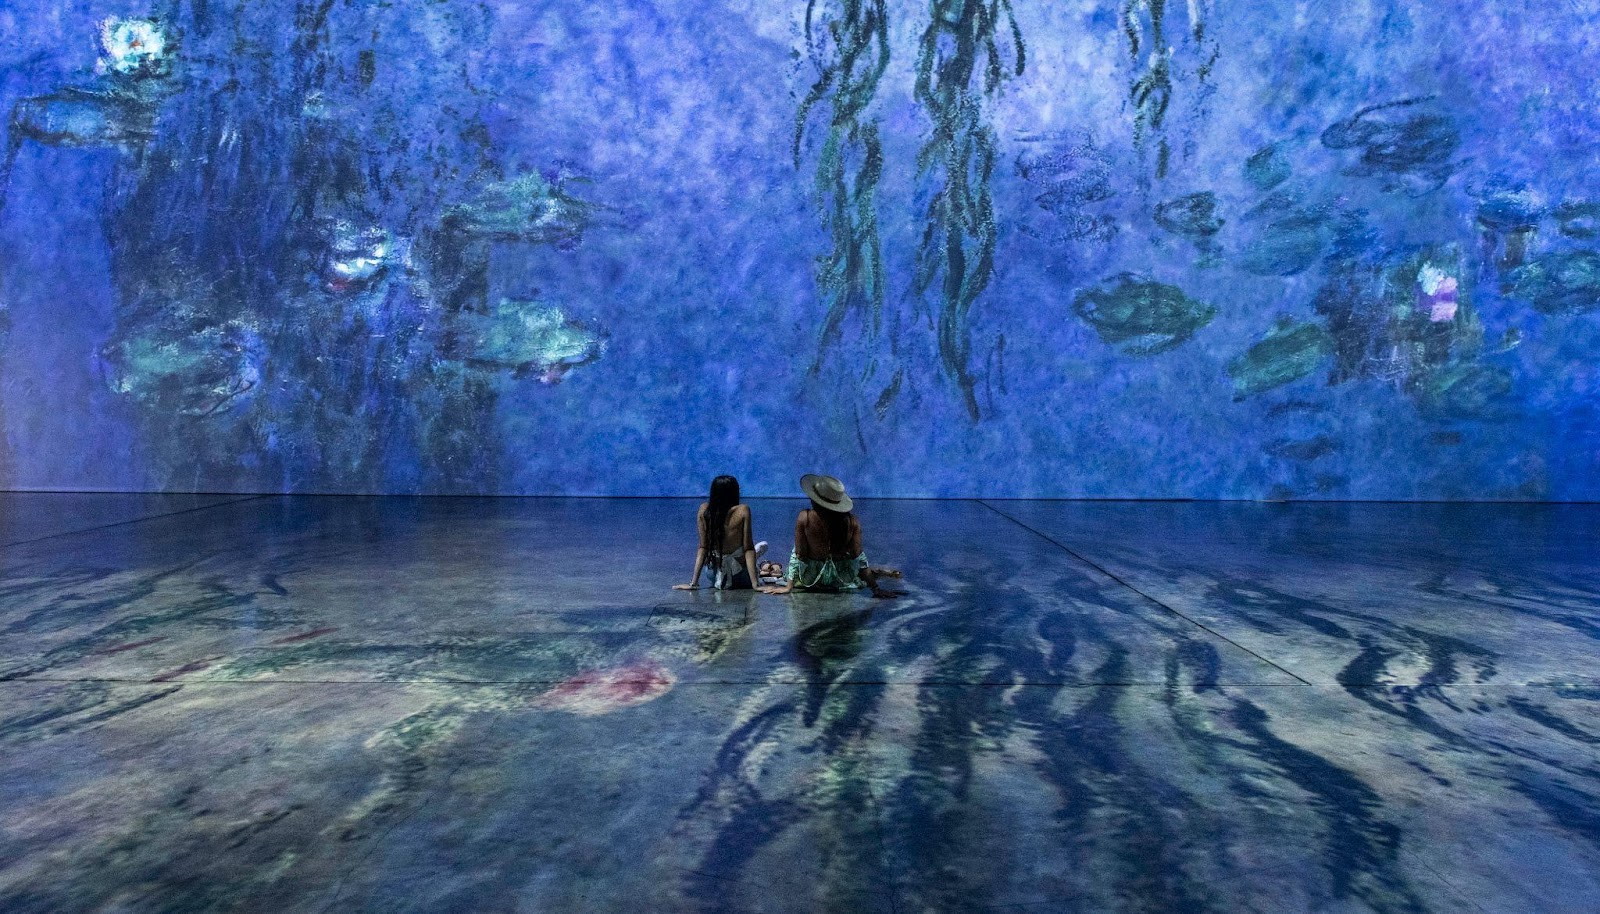 Beyond Monet: The Immersive Experience Nears Final Week